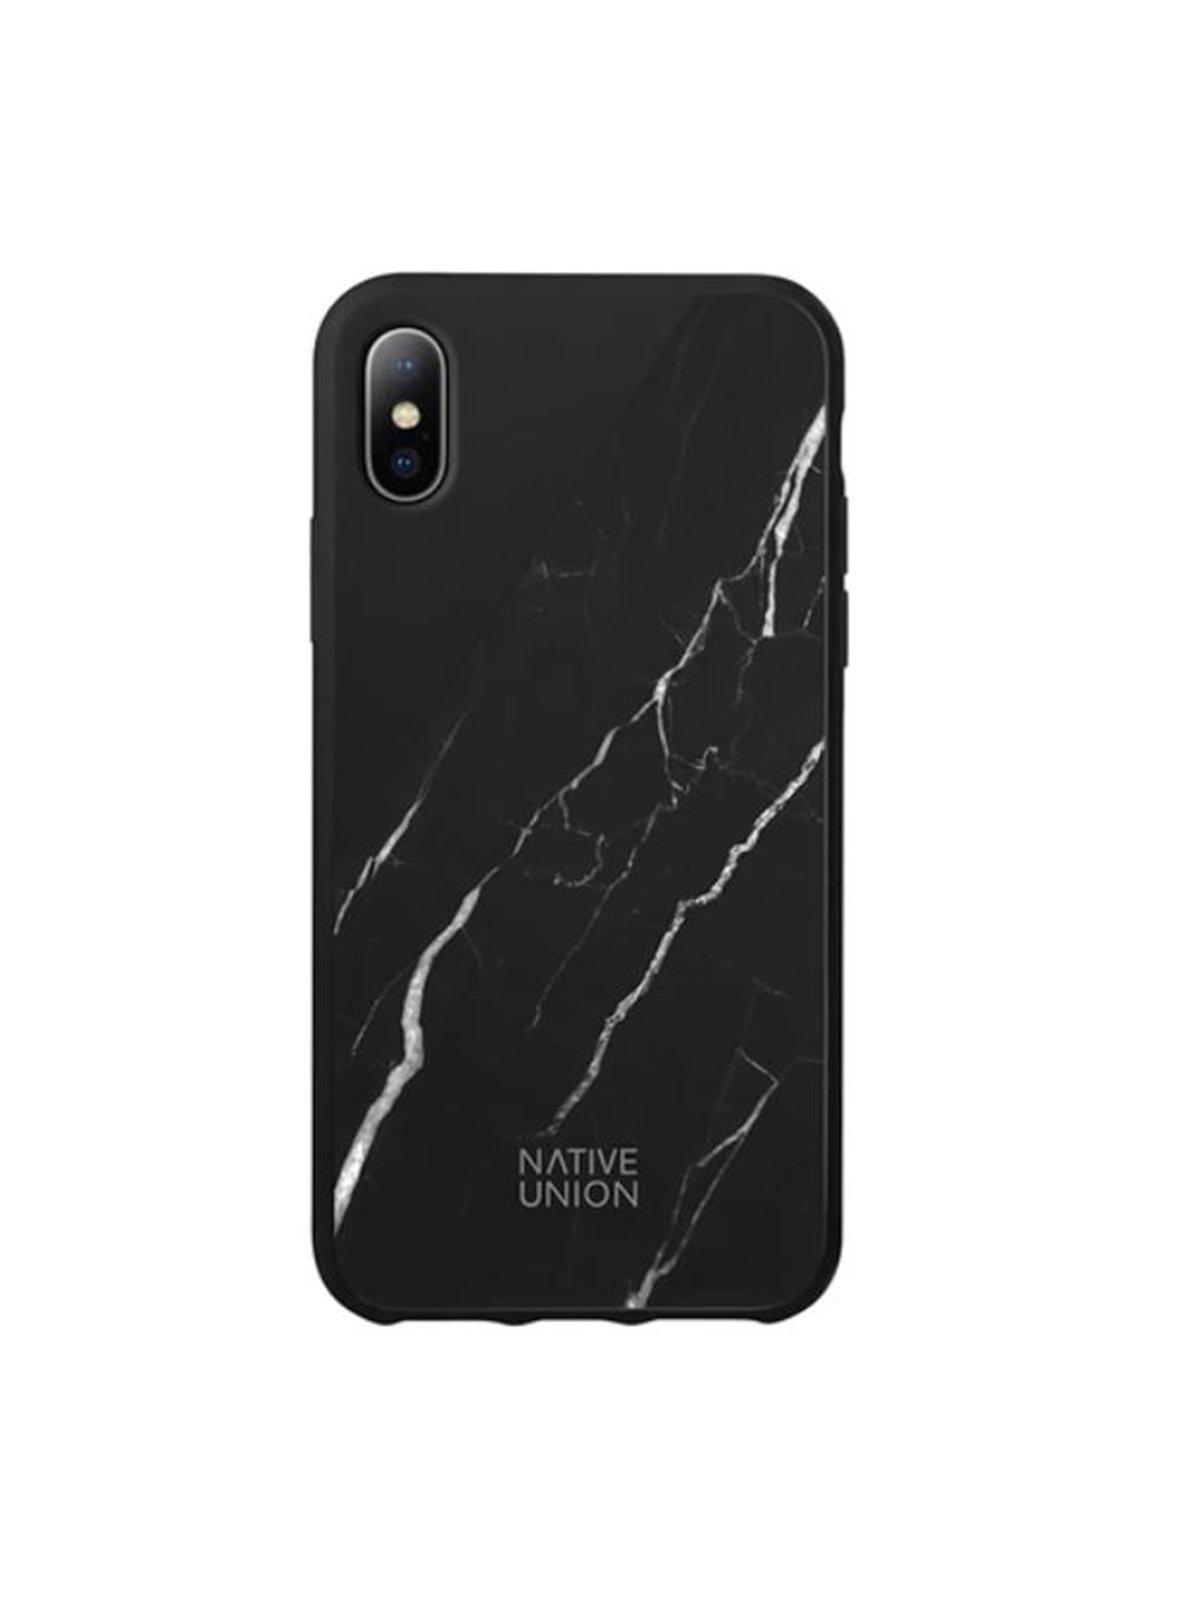 Native Union Clic Marble Case iPhone X Black - MORE by Morello Indonesia